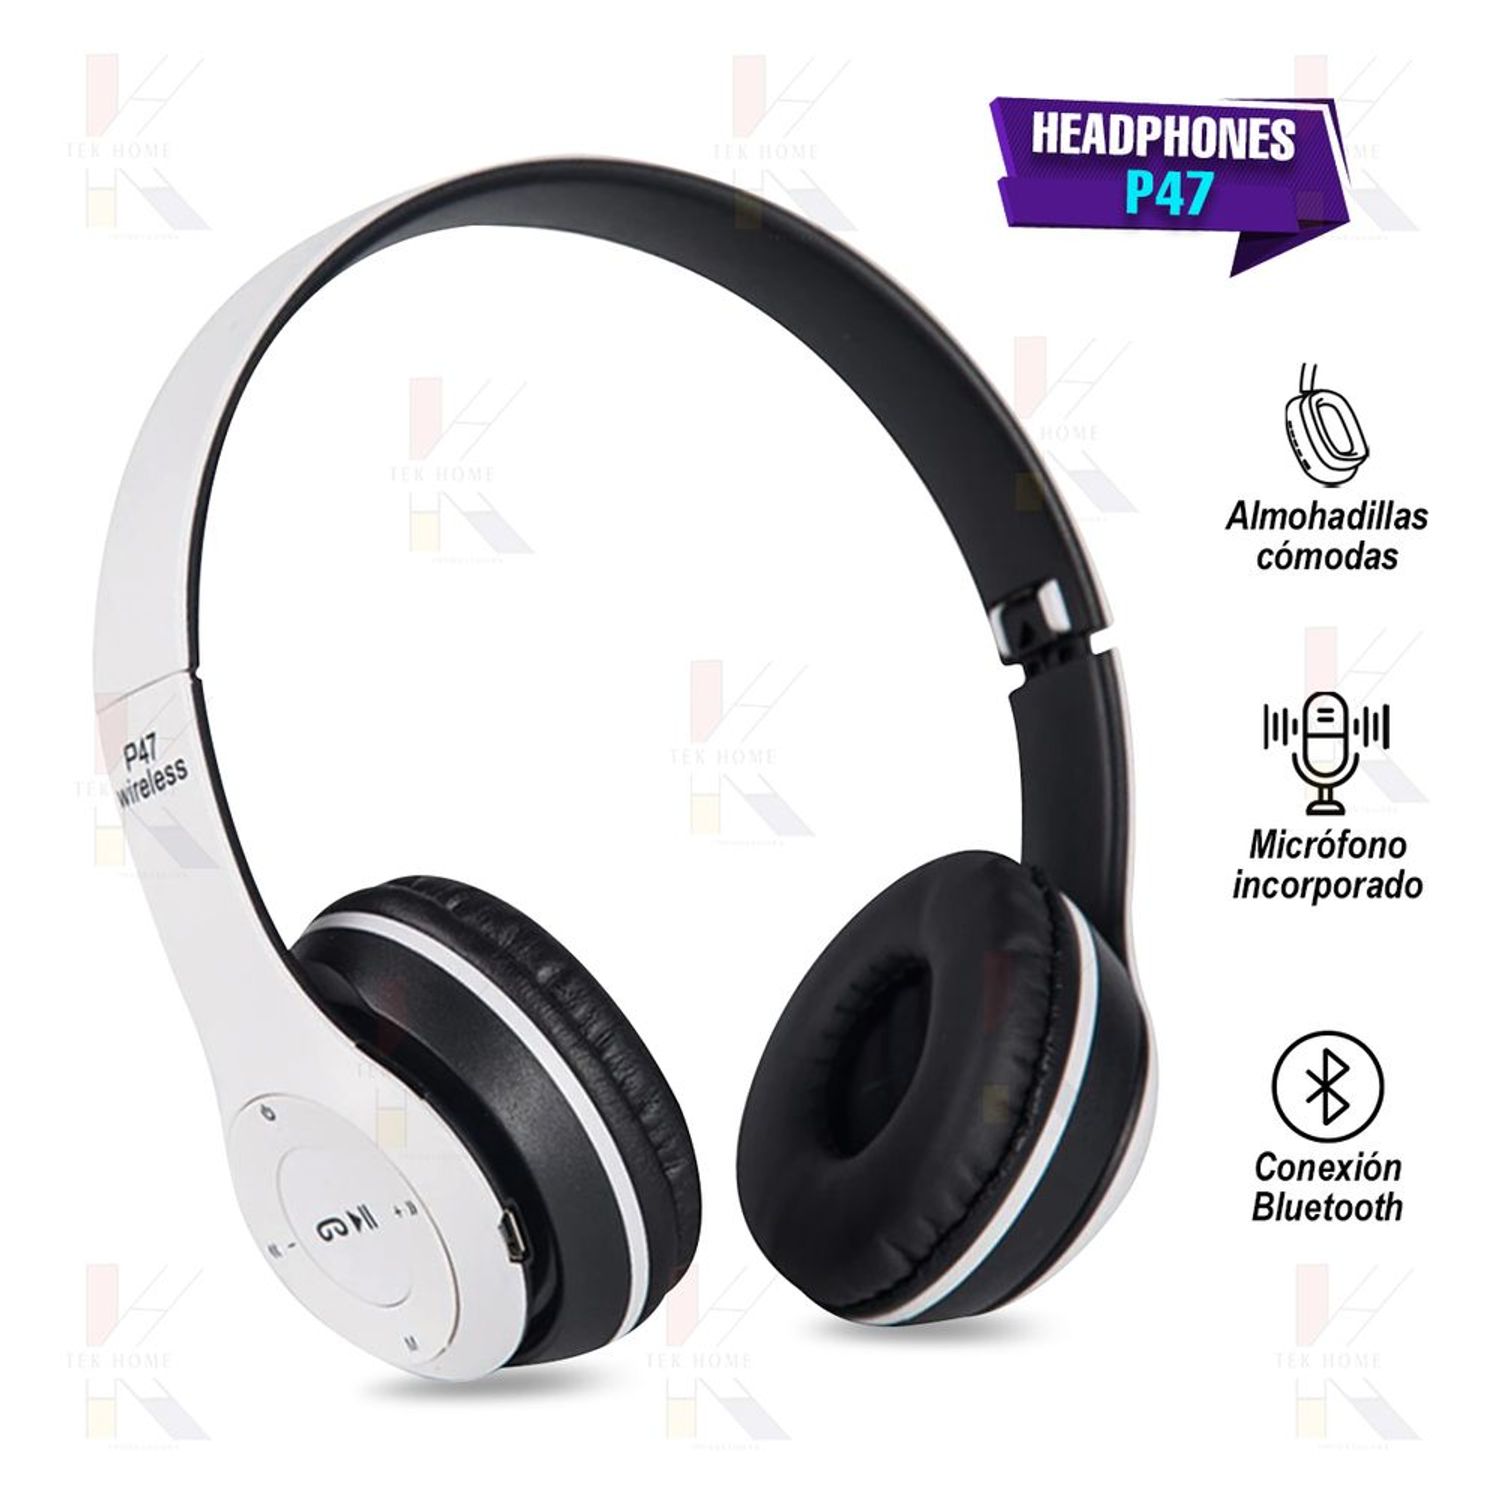 Audifonos Soundpeats Air4 - Blanco - Oechsle